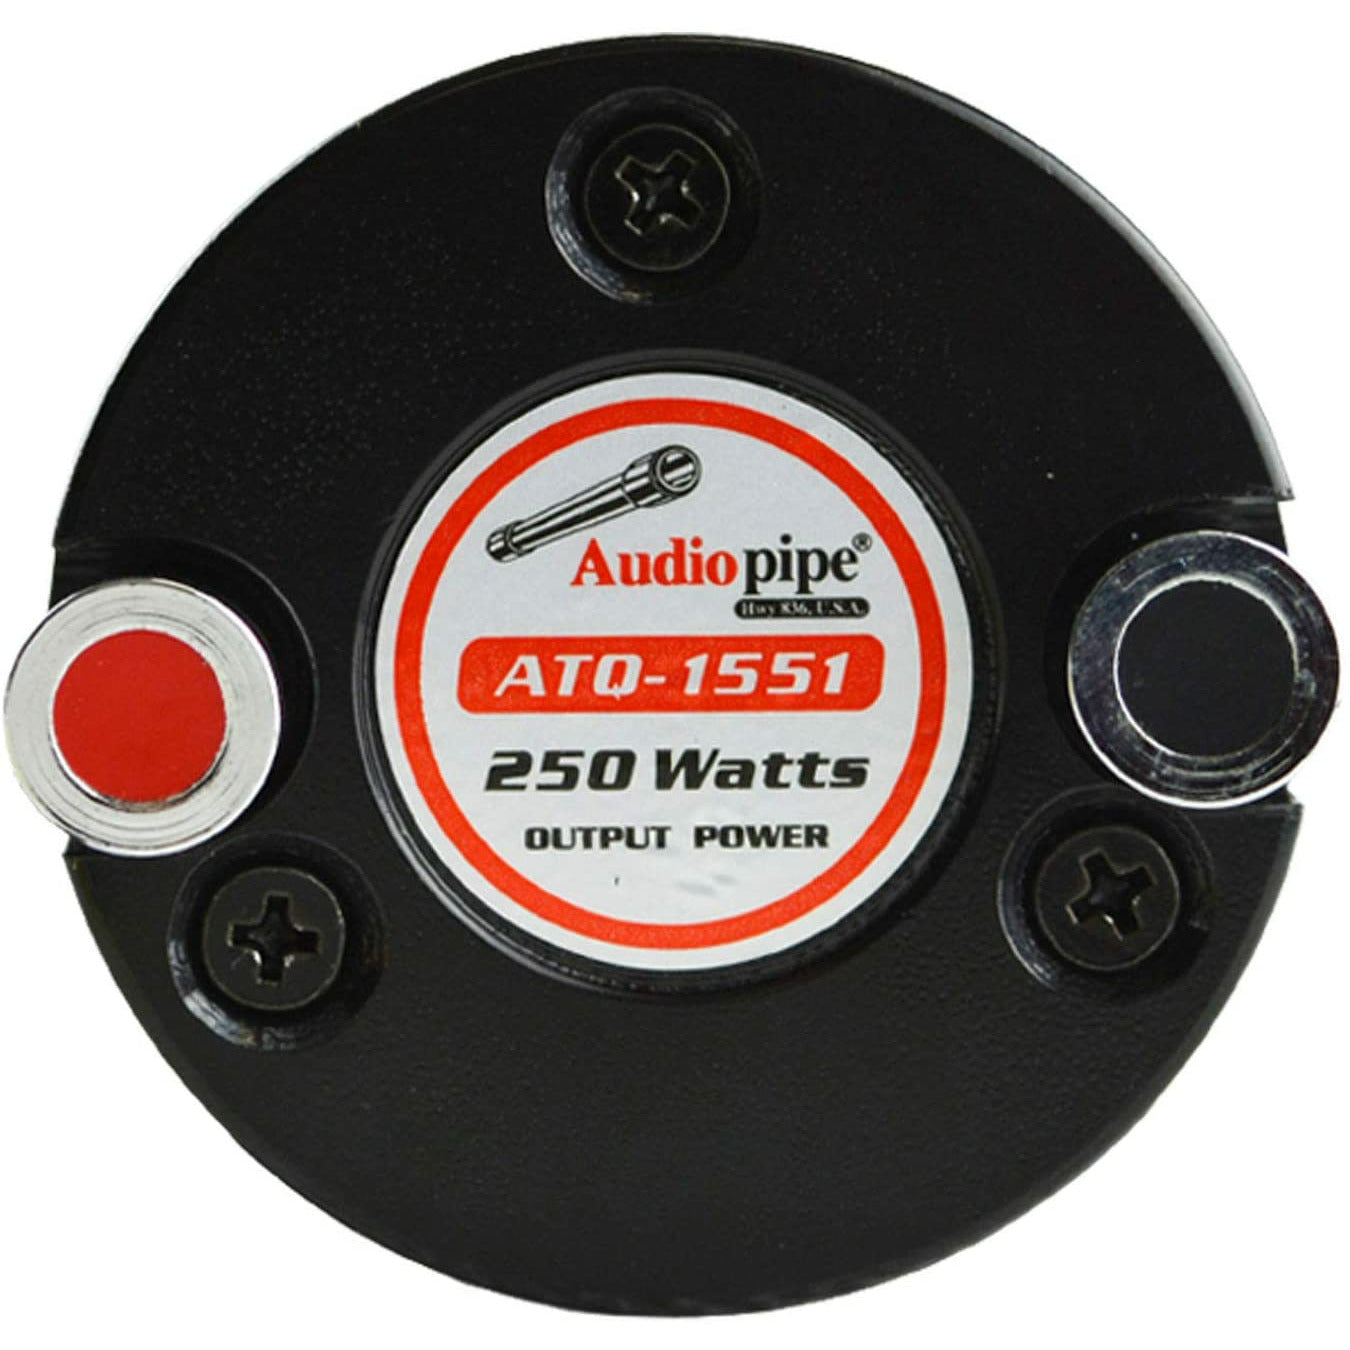 Audiopipe ATQ-1551 High Compression Super Bullet Tweeter 125 Watts 1" 